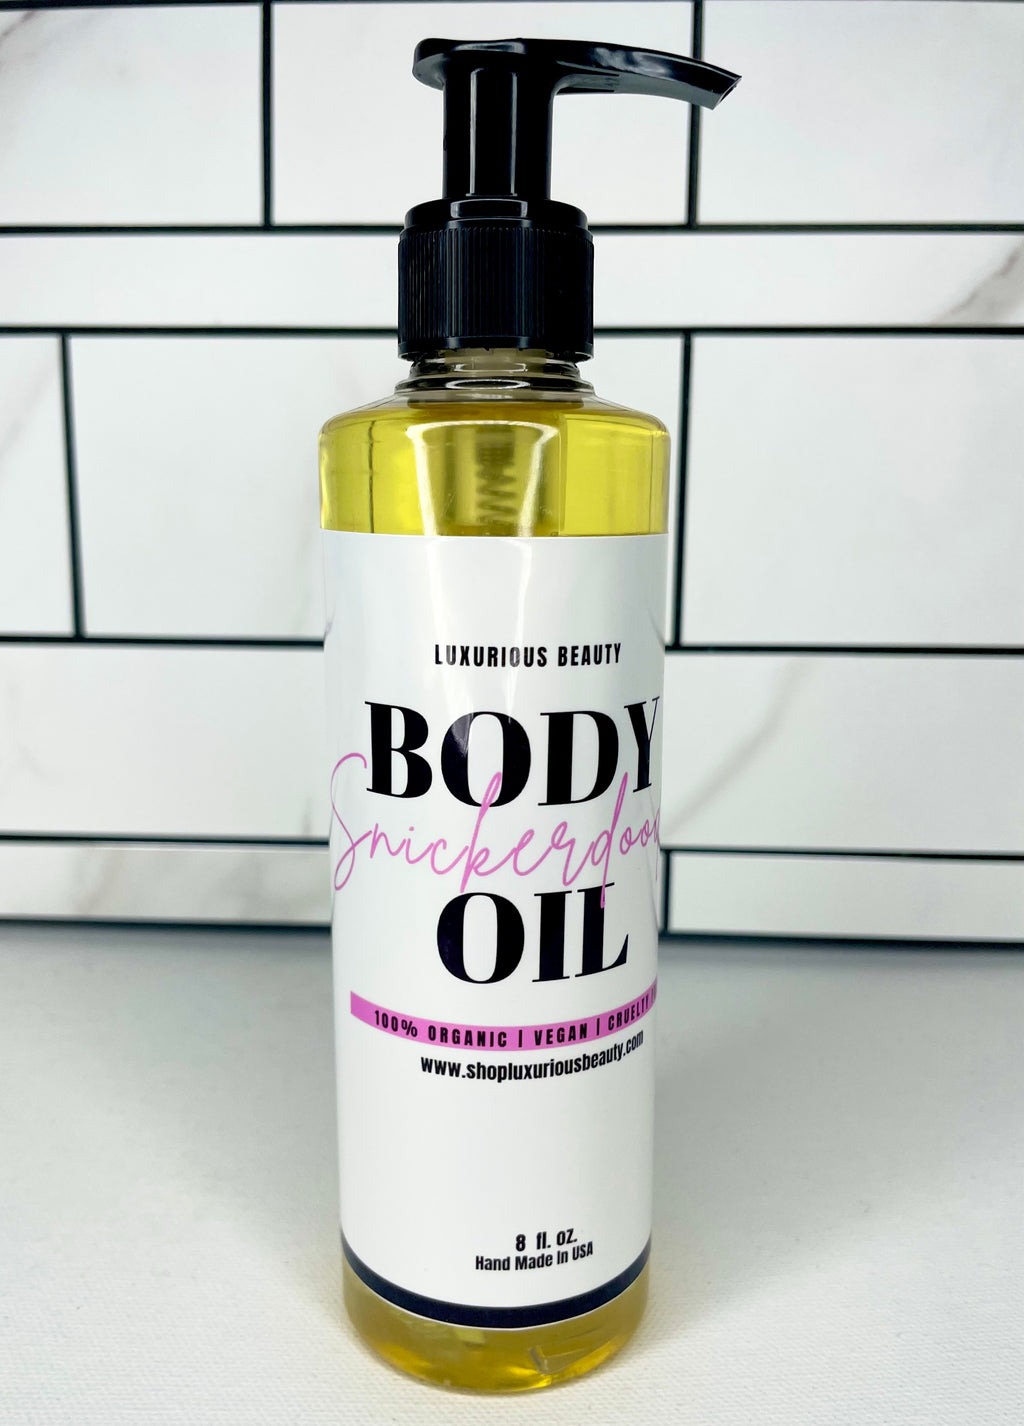 Snickerdoodle Body Oil